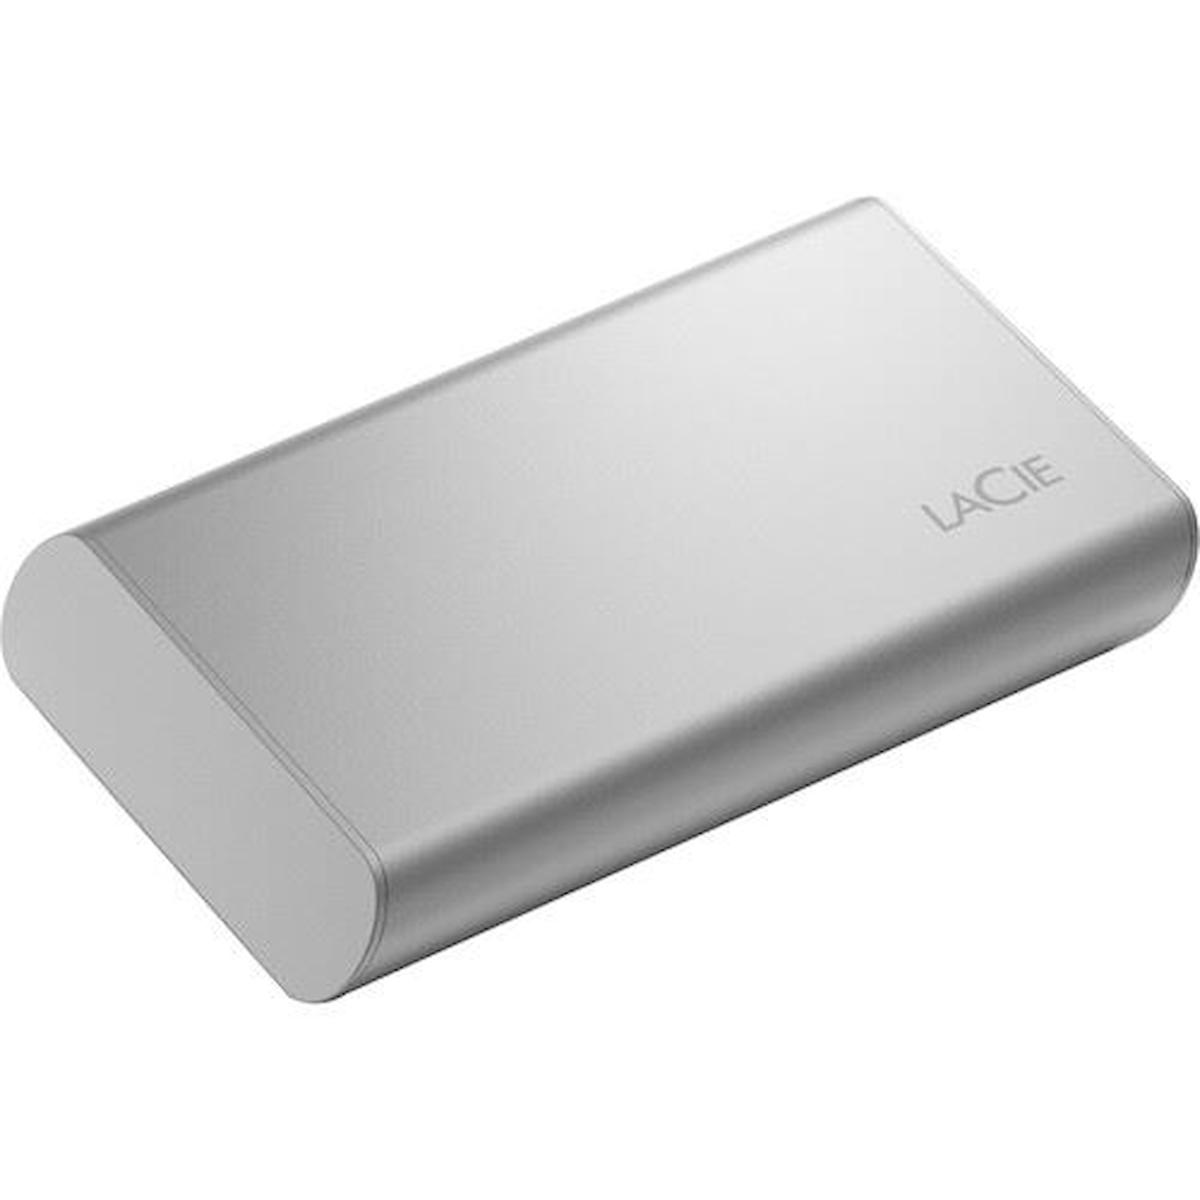 Lacie STKS2000400 2 TB 2.5 inç SSD